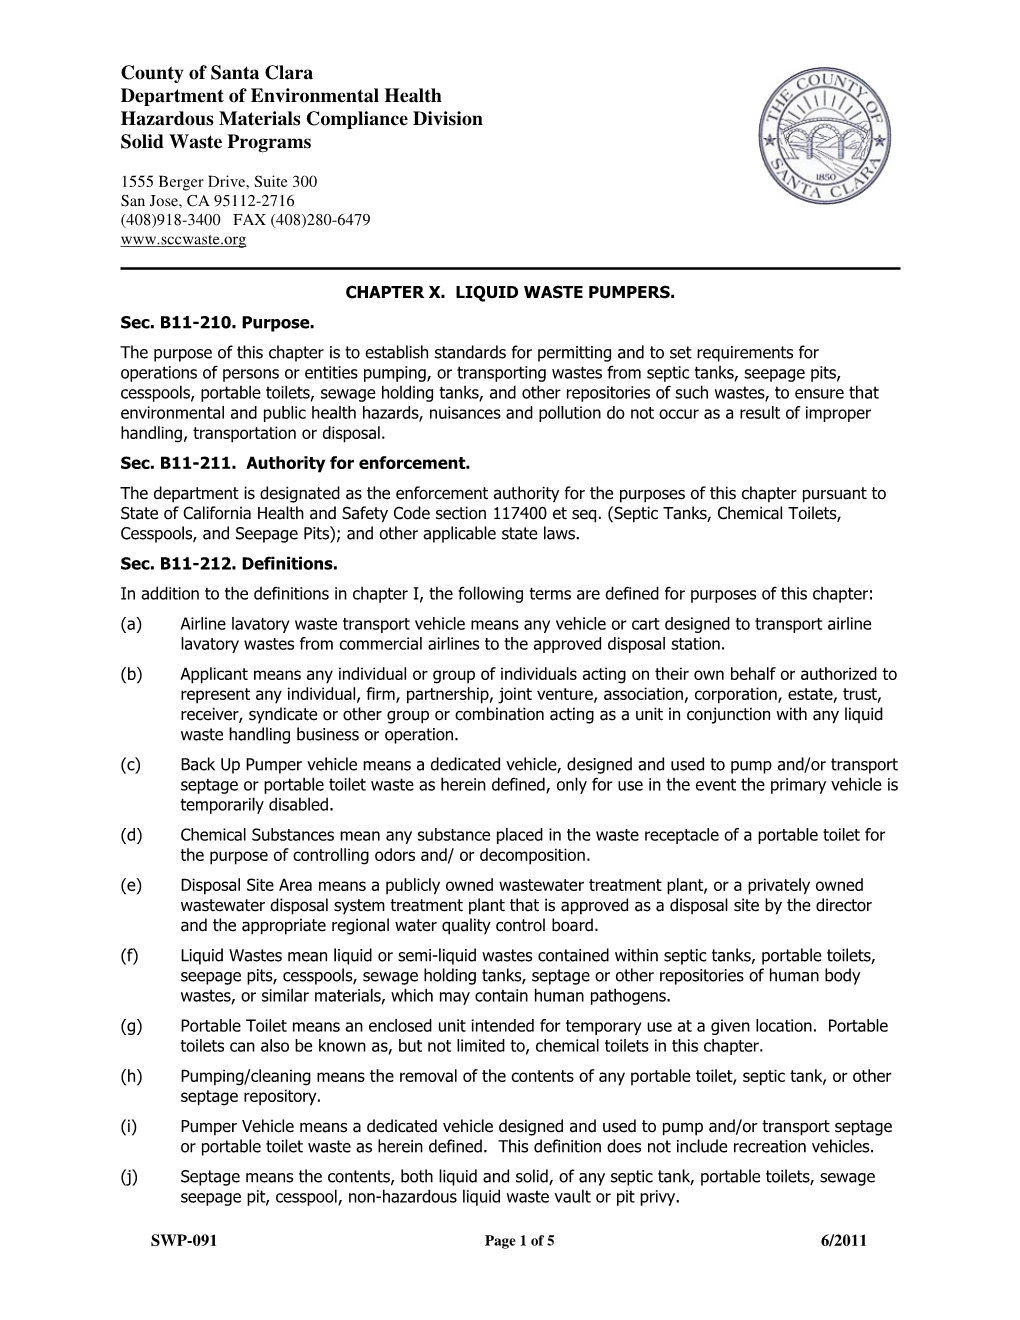 County Ordinance Code Section B11-210